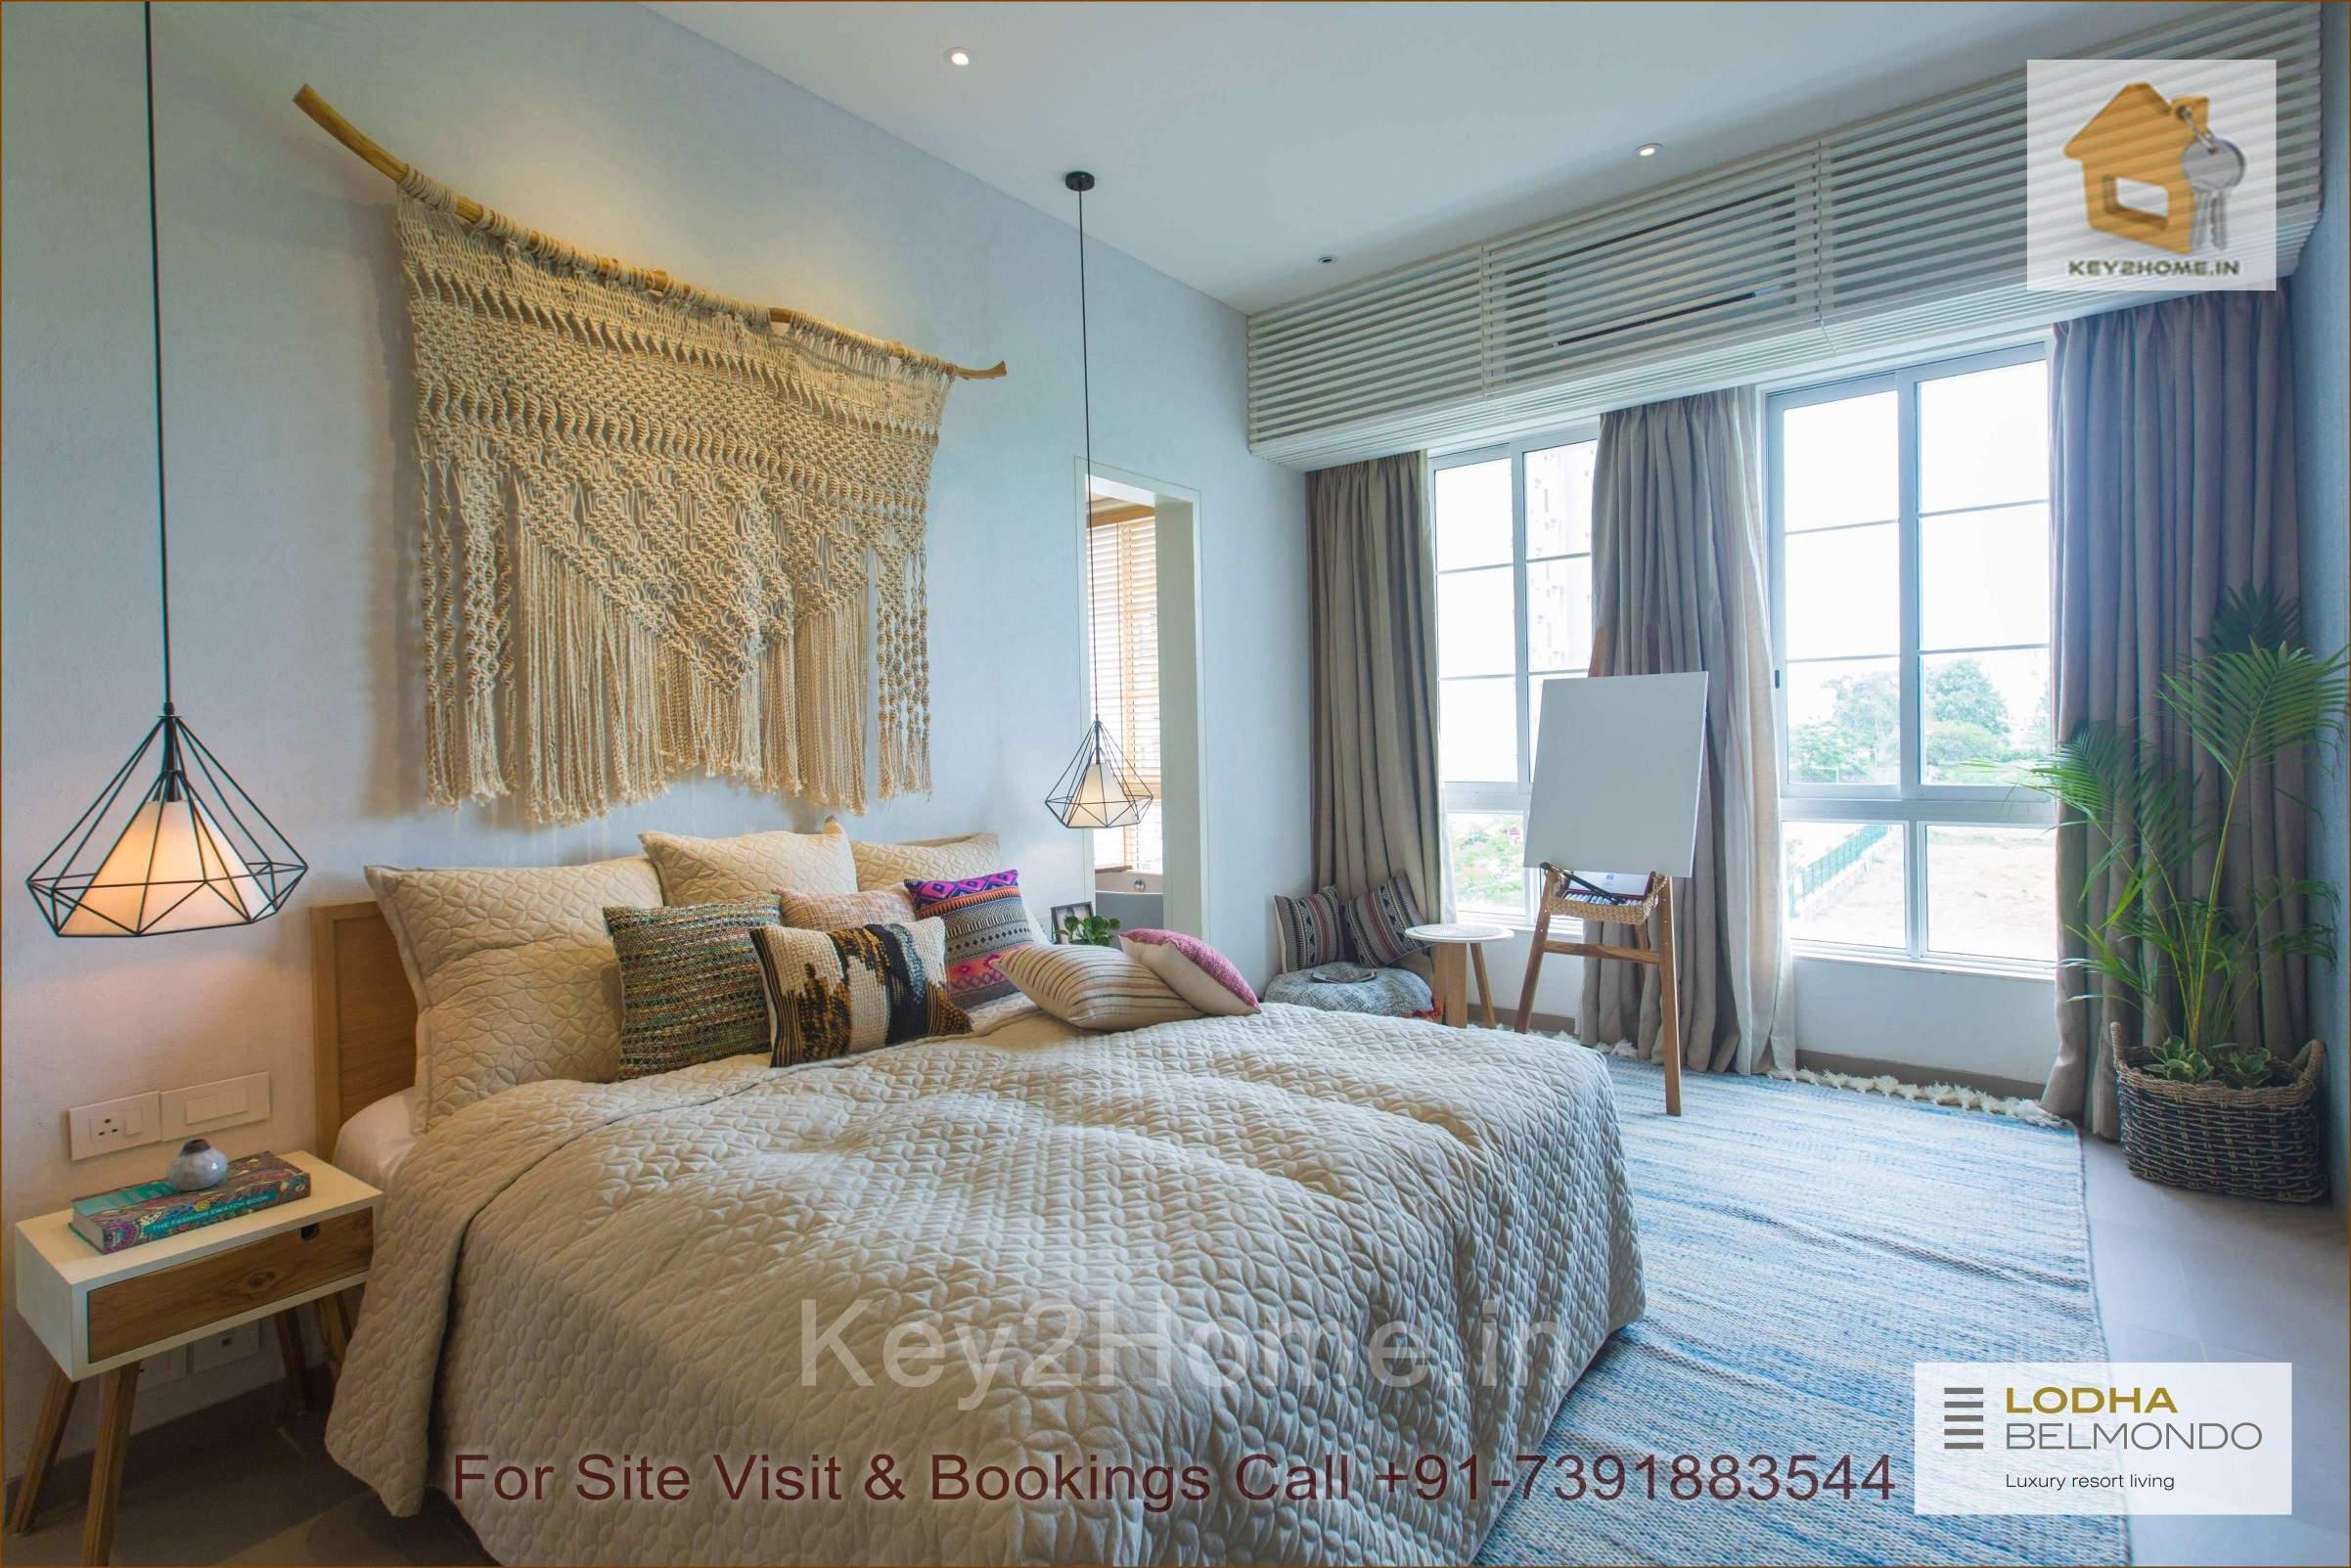 Bedroom 2 of Lodha Belmondo Premium Villas and Housing Pune